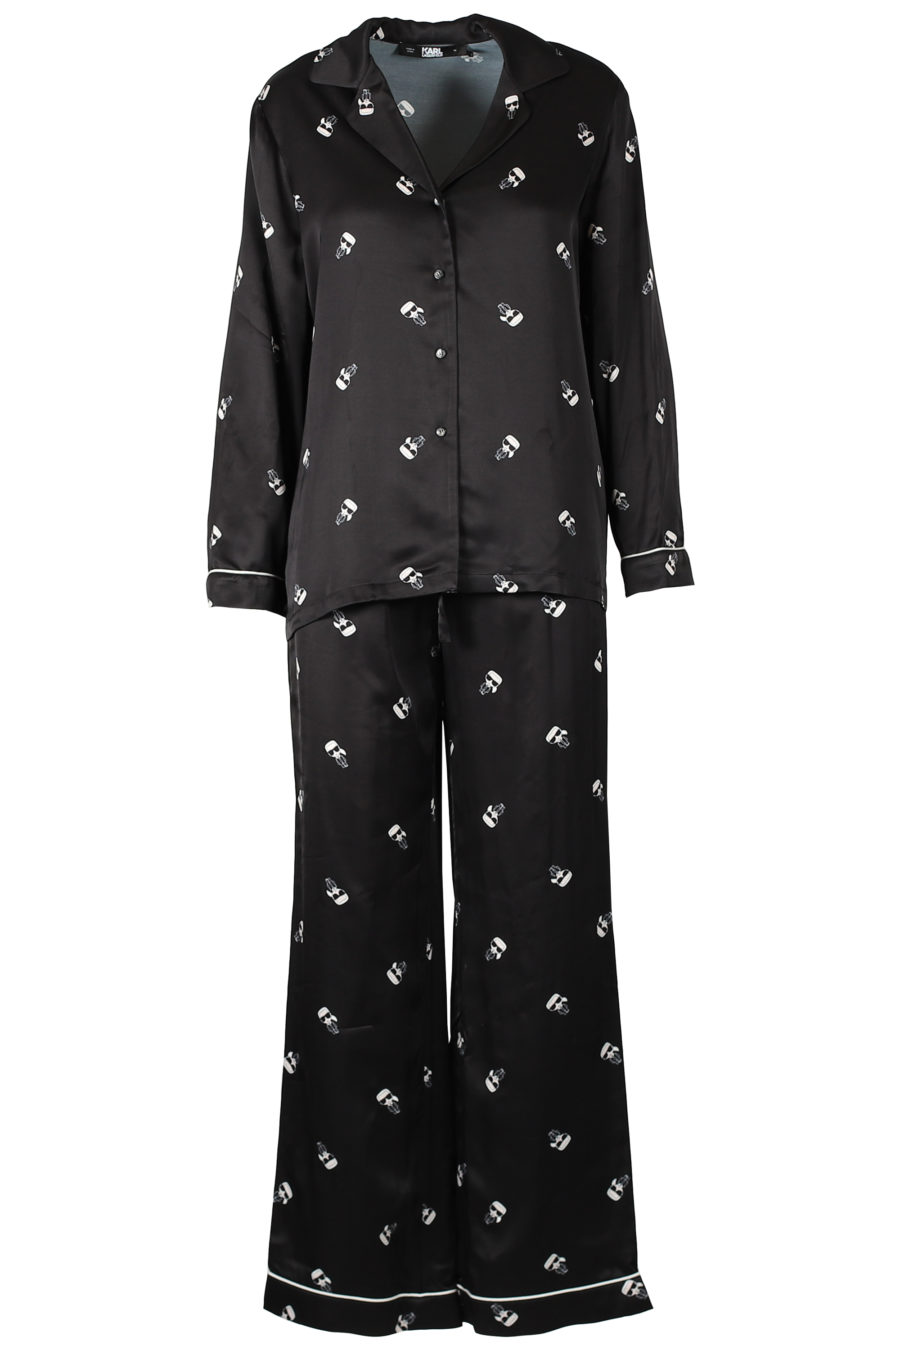 Set de regalo pijama de color negro - IMG 3284